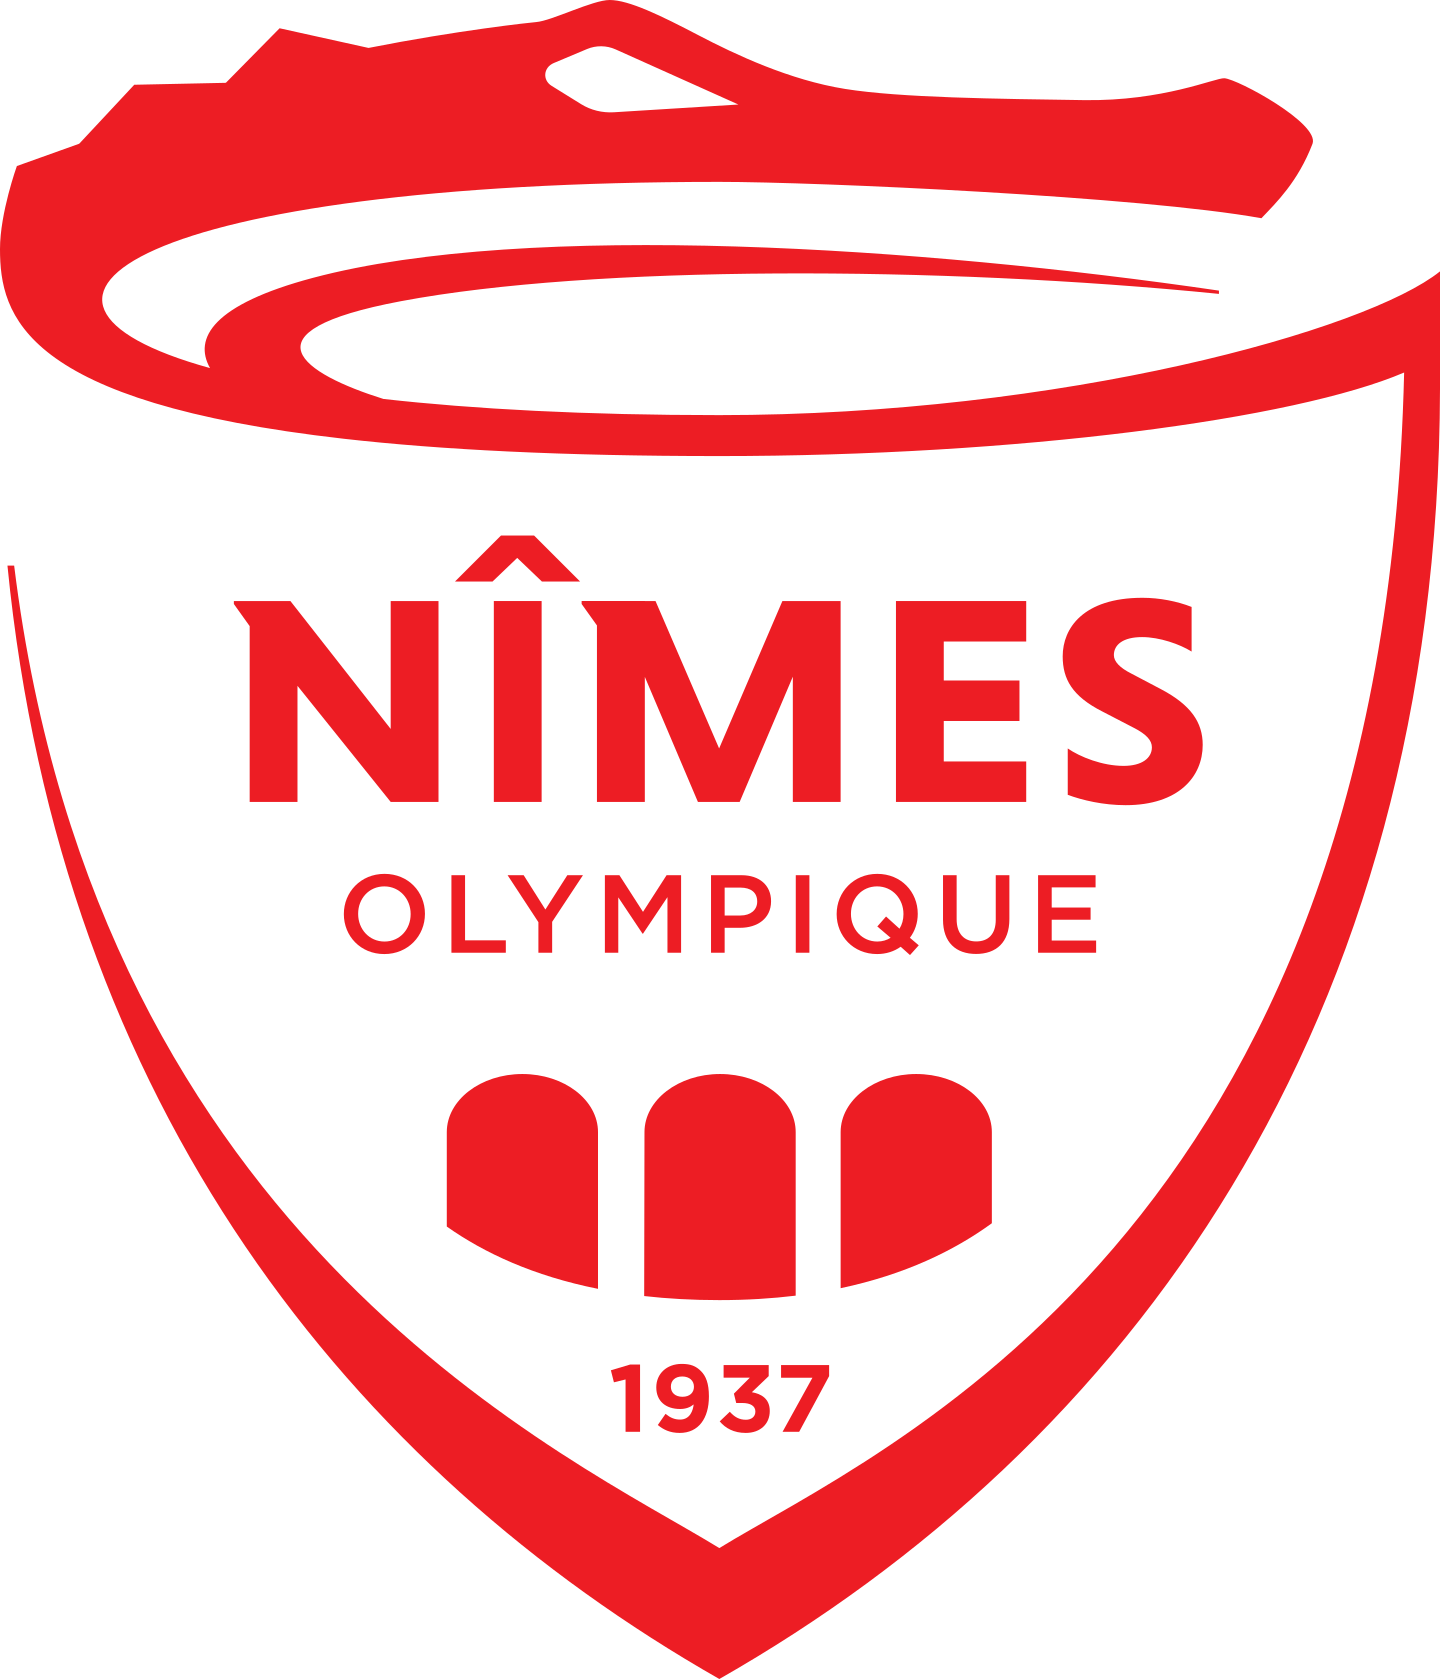 nimes olympique logo 2 - Nîmes Olympique Logo